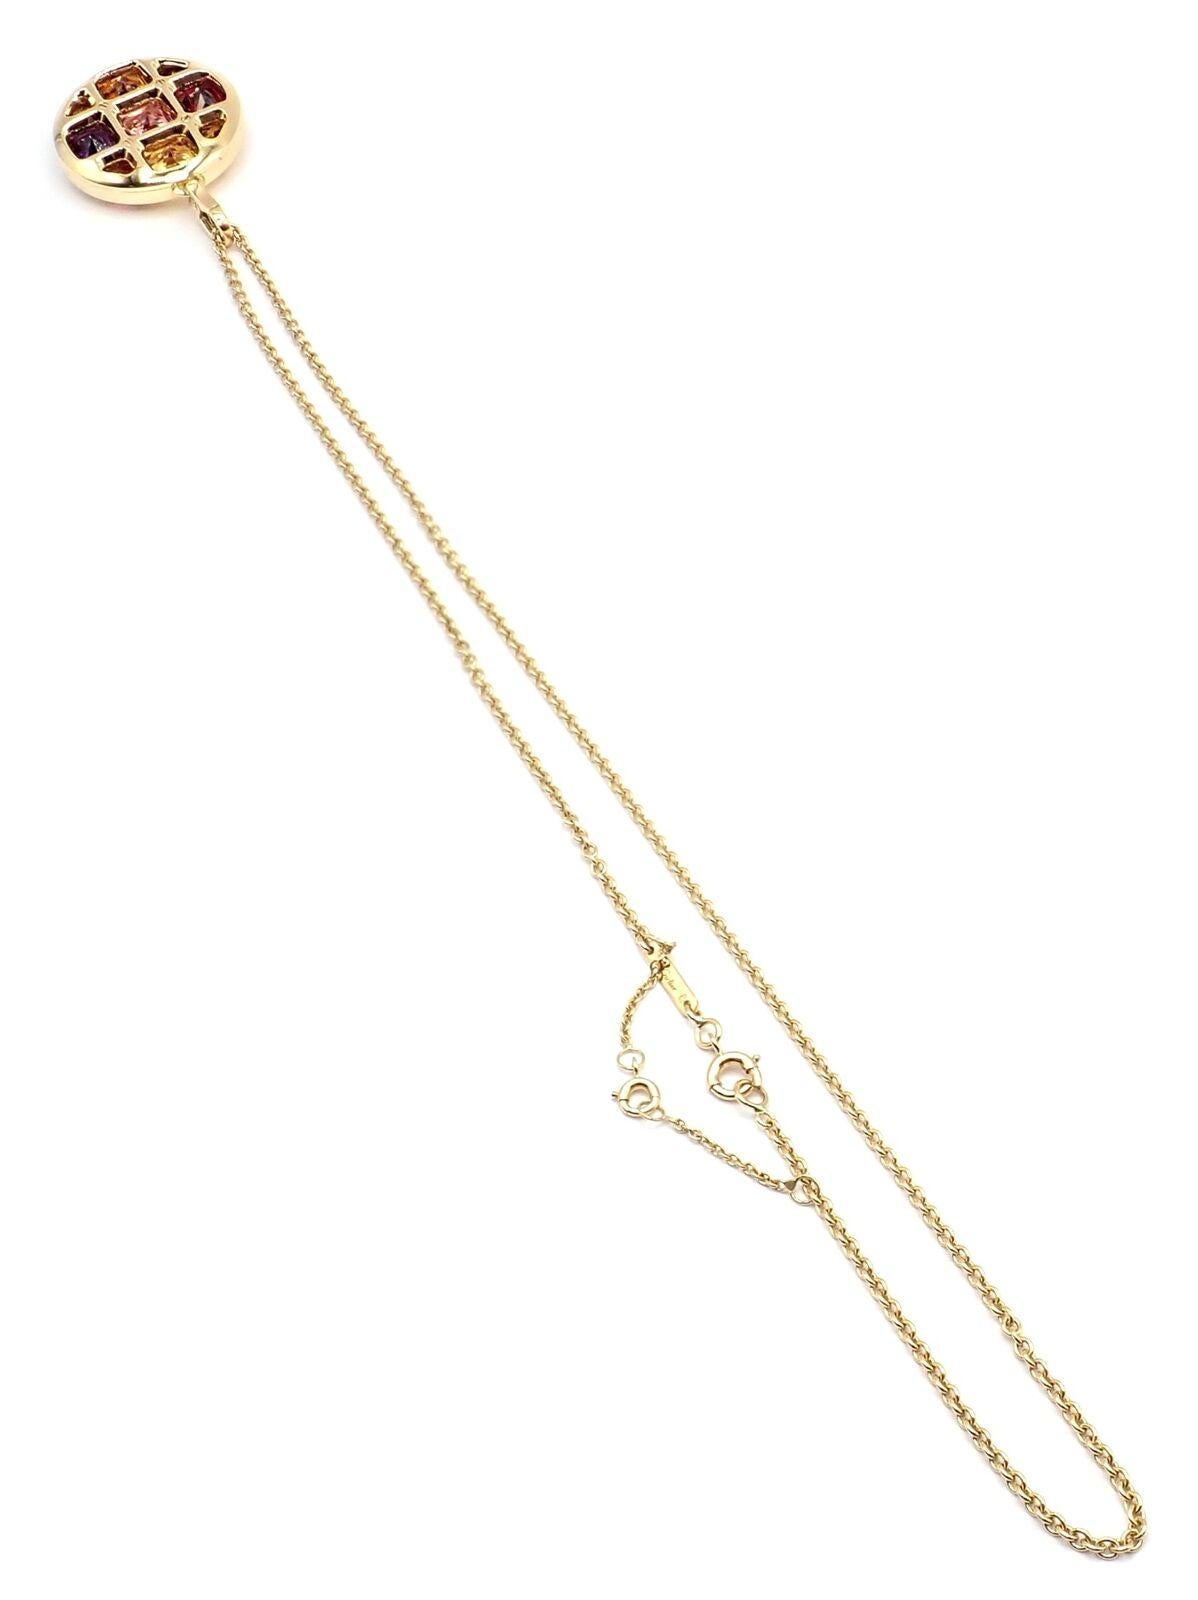 Cartier Pasha Amethyst Citrine Garnet Tourmaline Yellow Gold Pendant Necklace For Sale 4